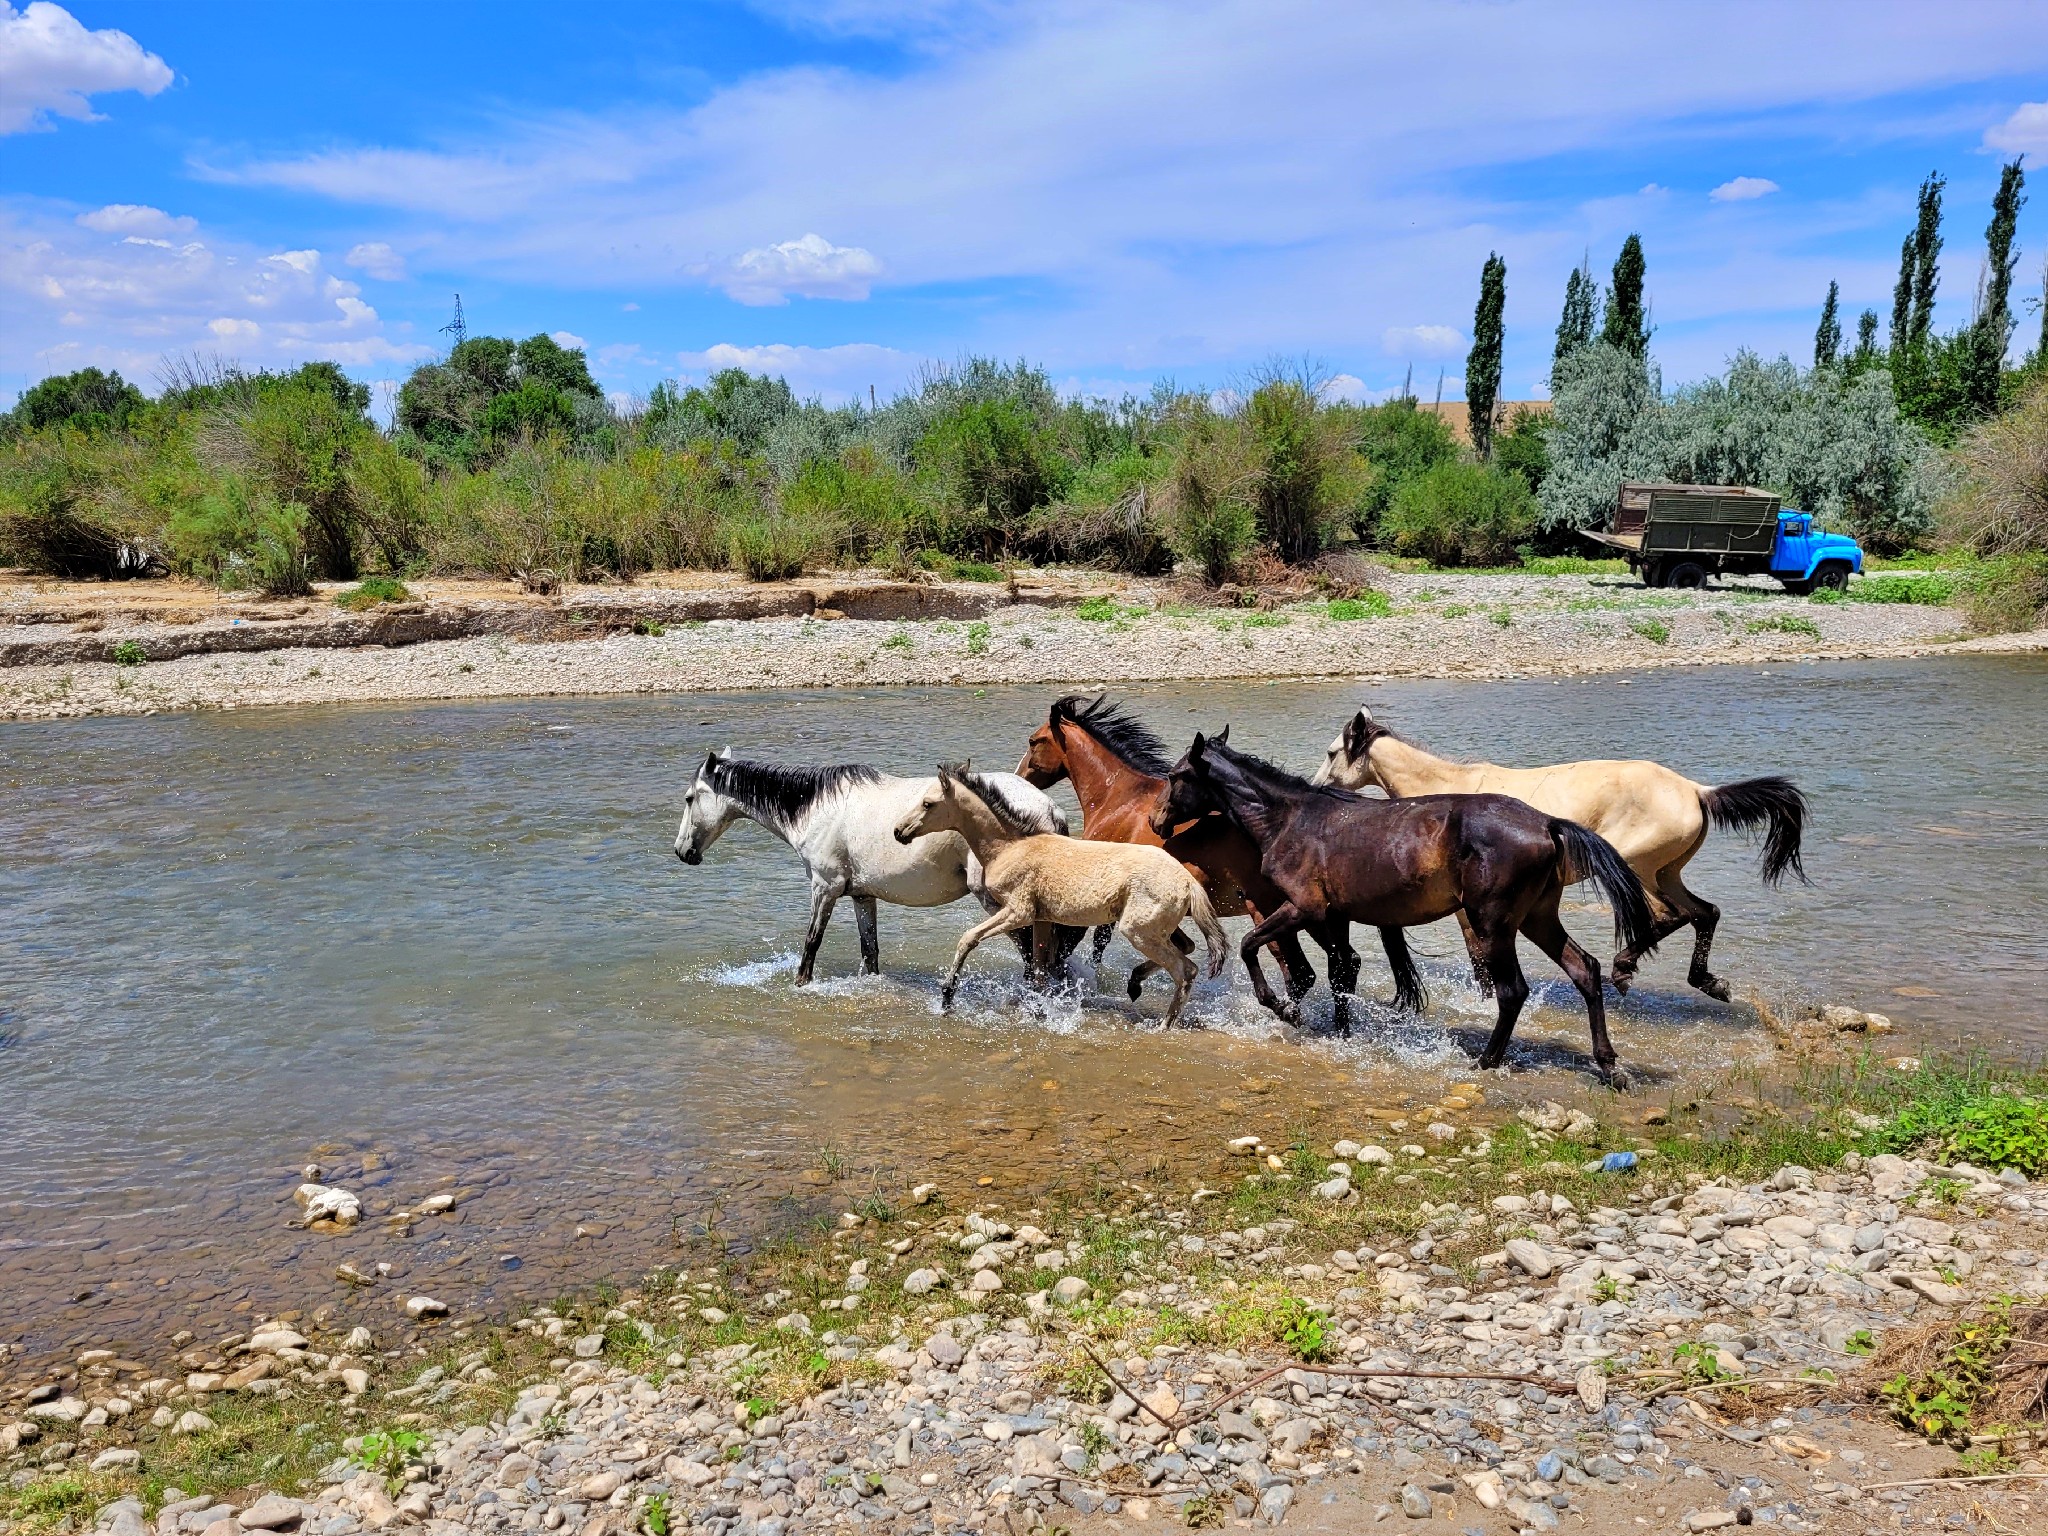 Info Shymkent - Horses crossing the Boraldai river in the Turkestan region, Kazakhstan